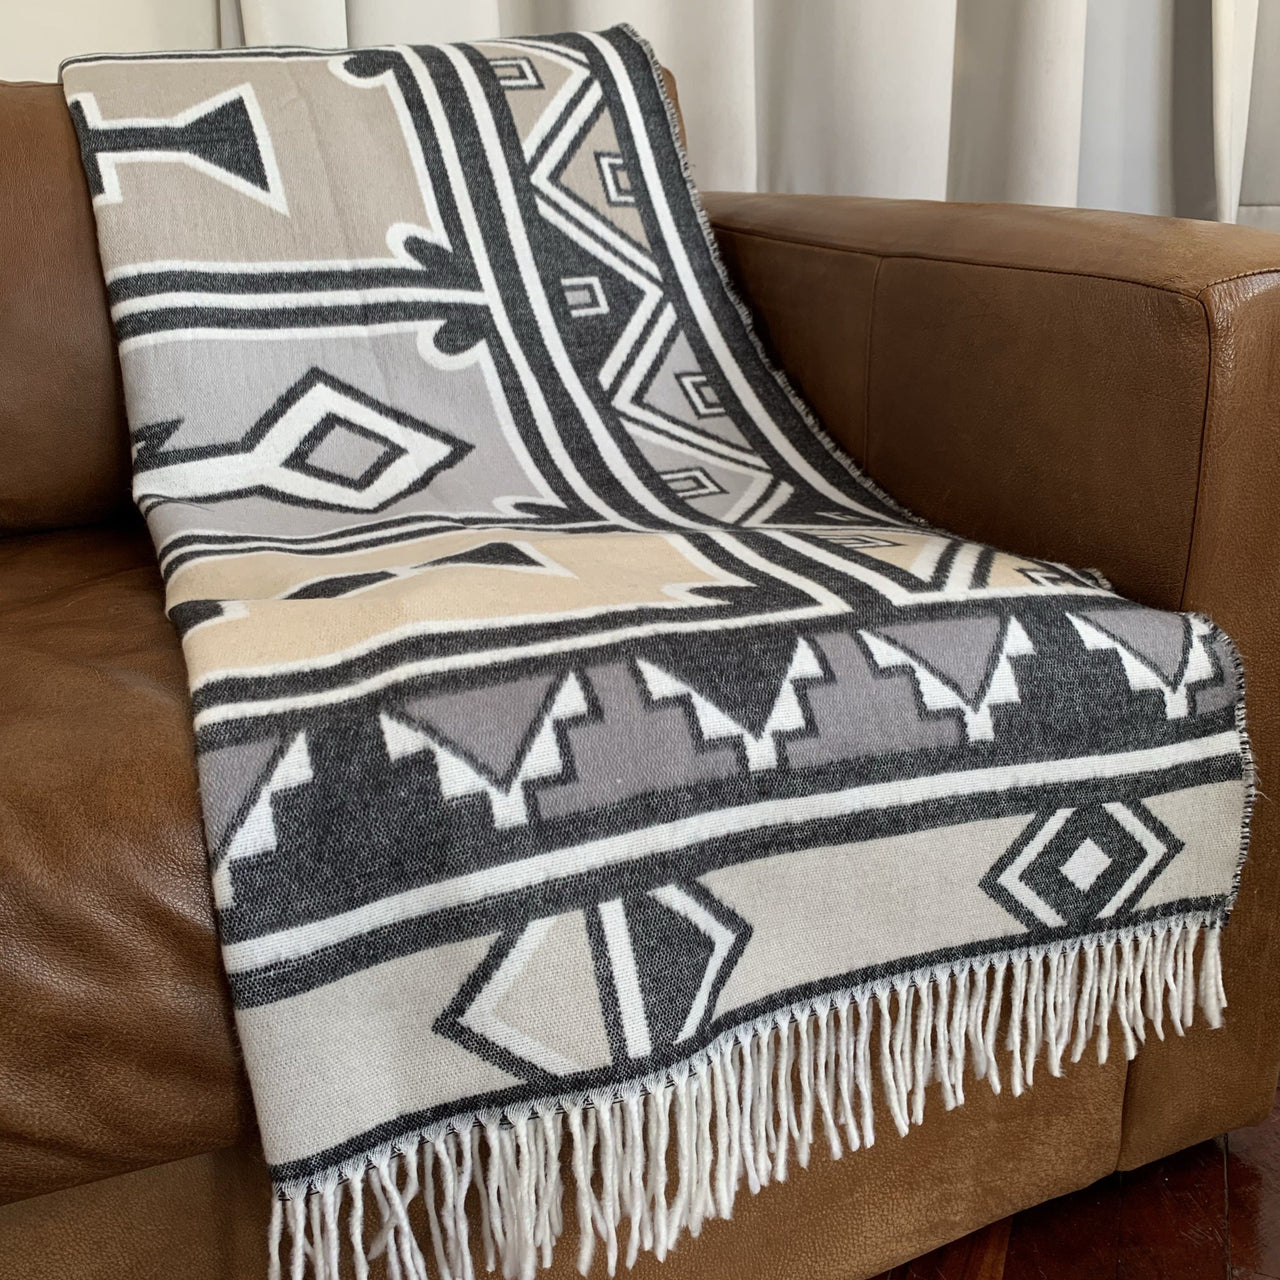 Ndebele throw grey and black geometric pattern